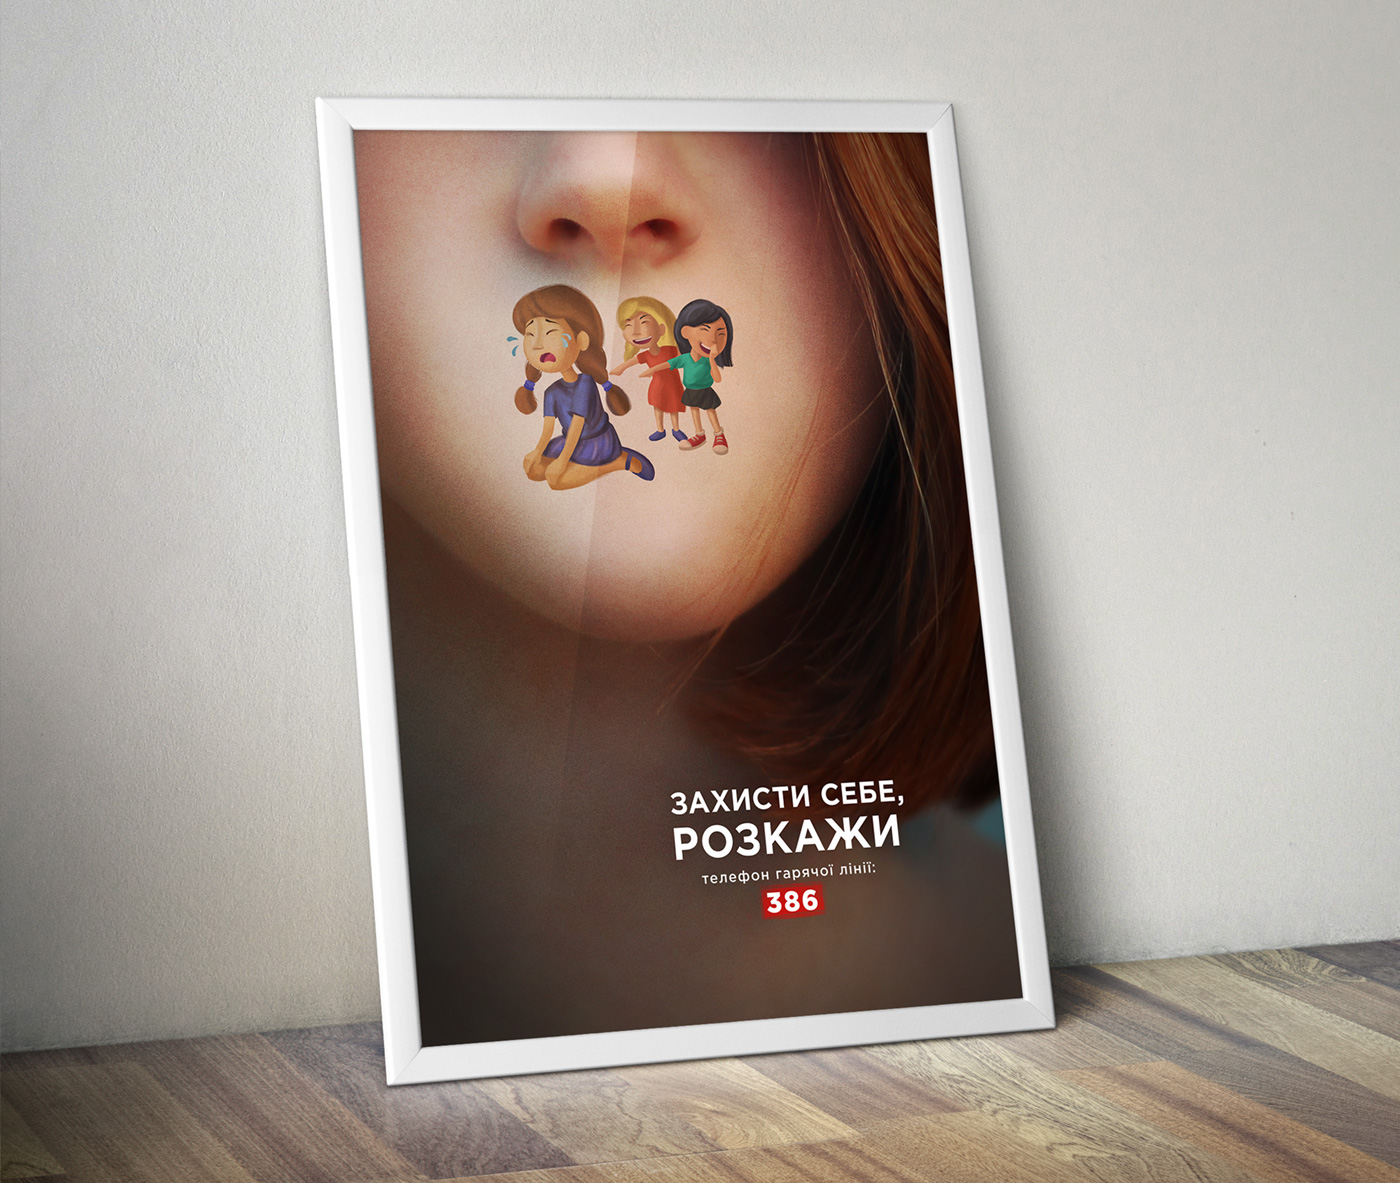 social Advertising  Character Bullying bully anti-bullying ad ILLUSTRATION  billboard poster